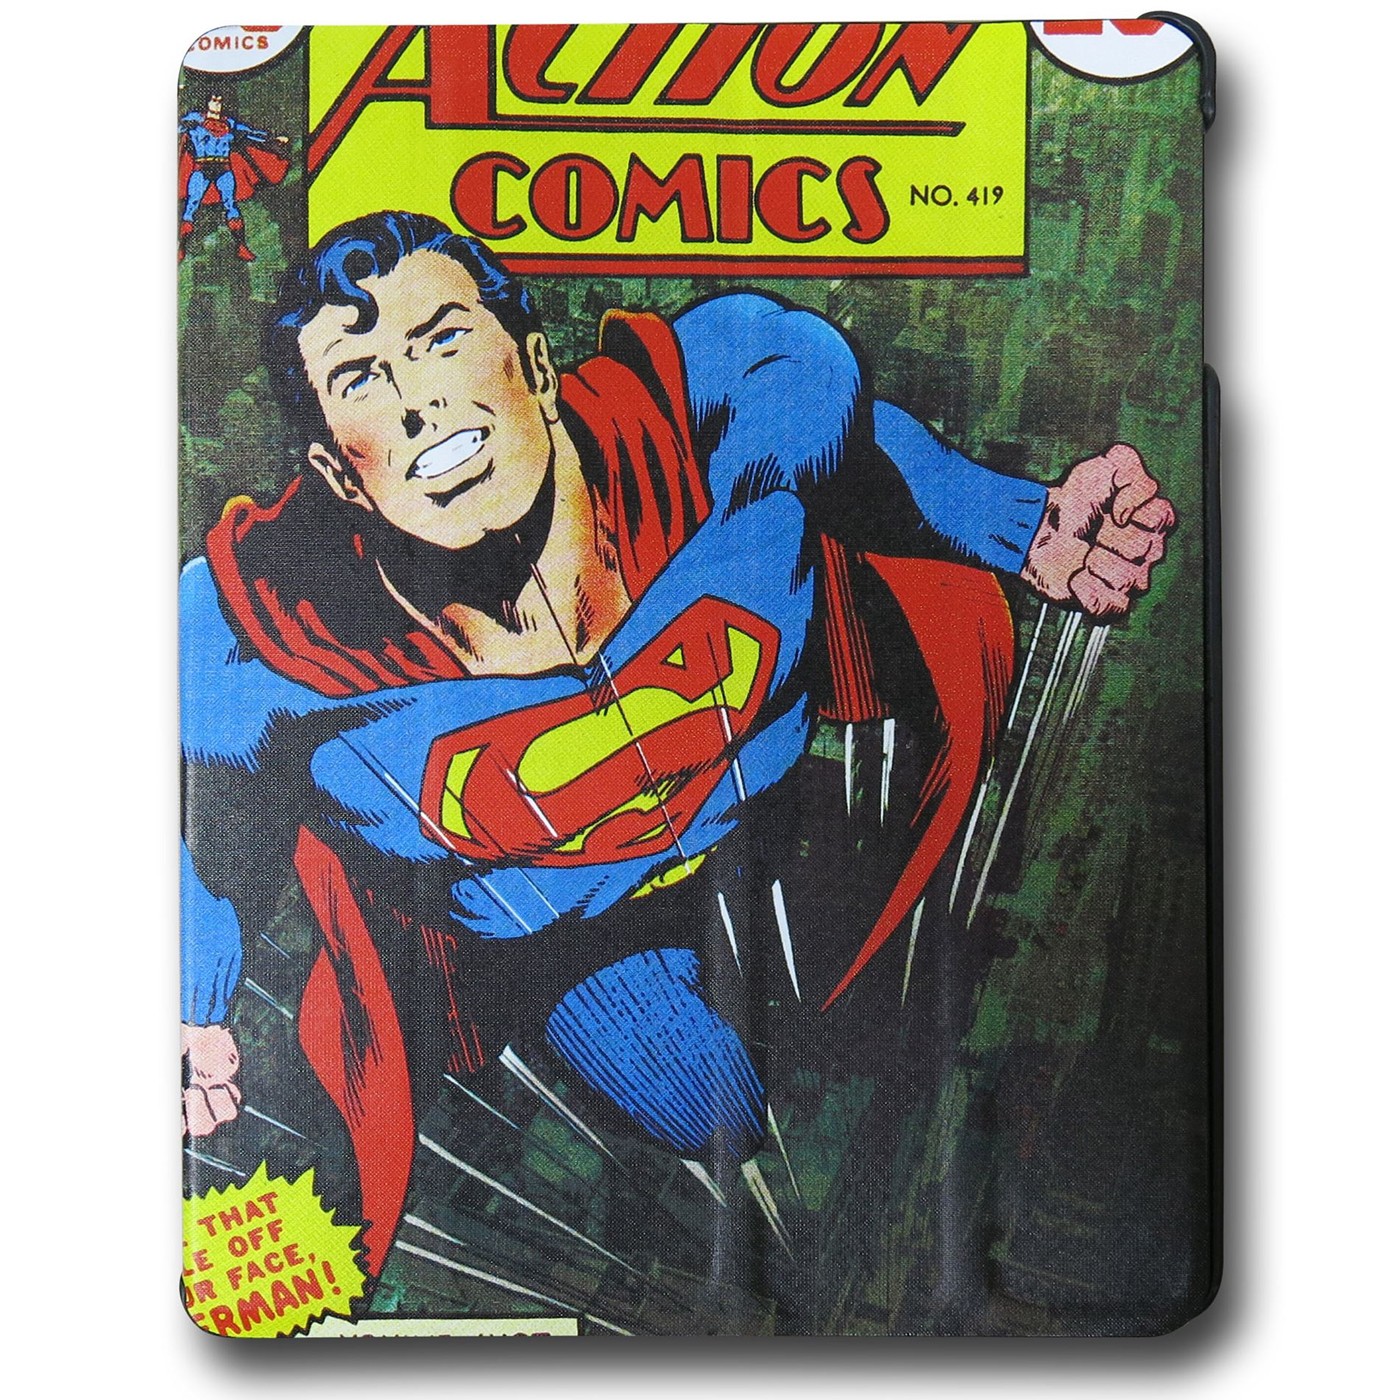 Action Comics #419 Cover iPad Sleeve Case